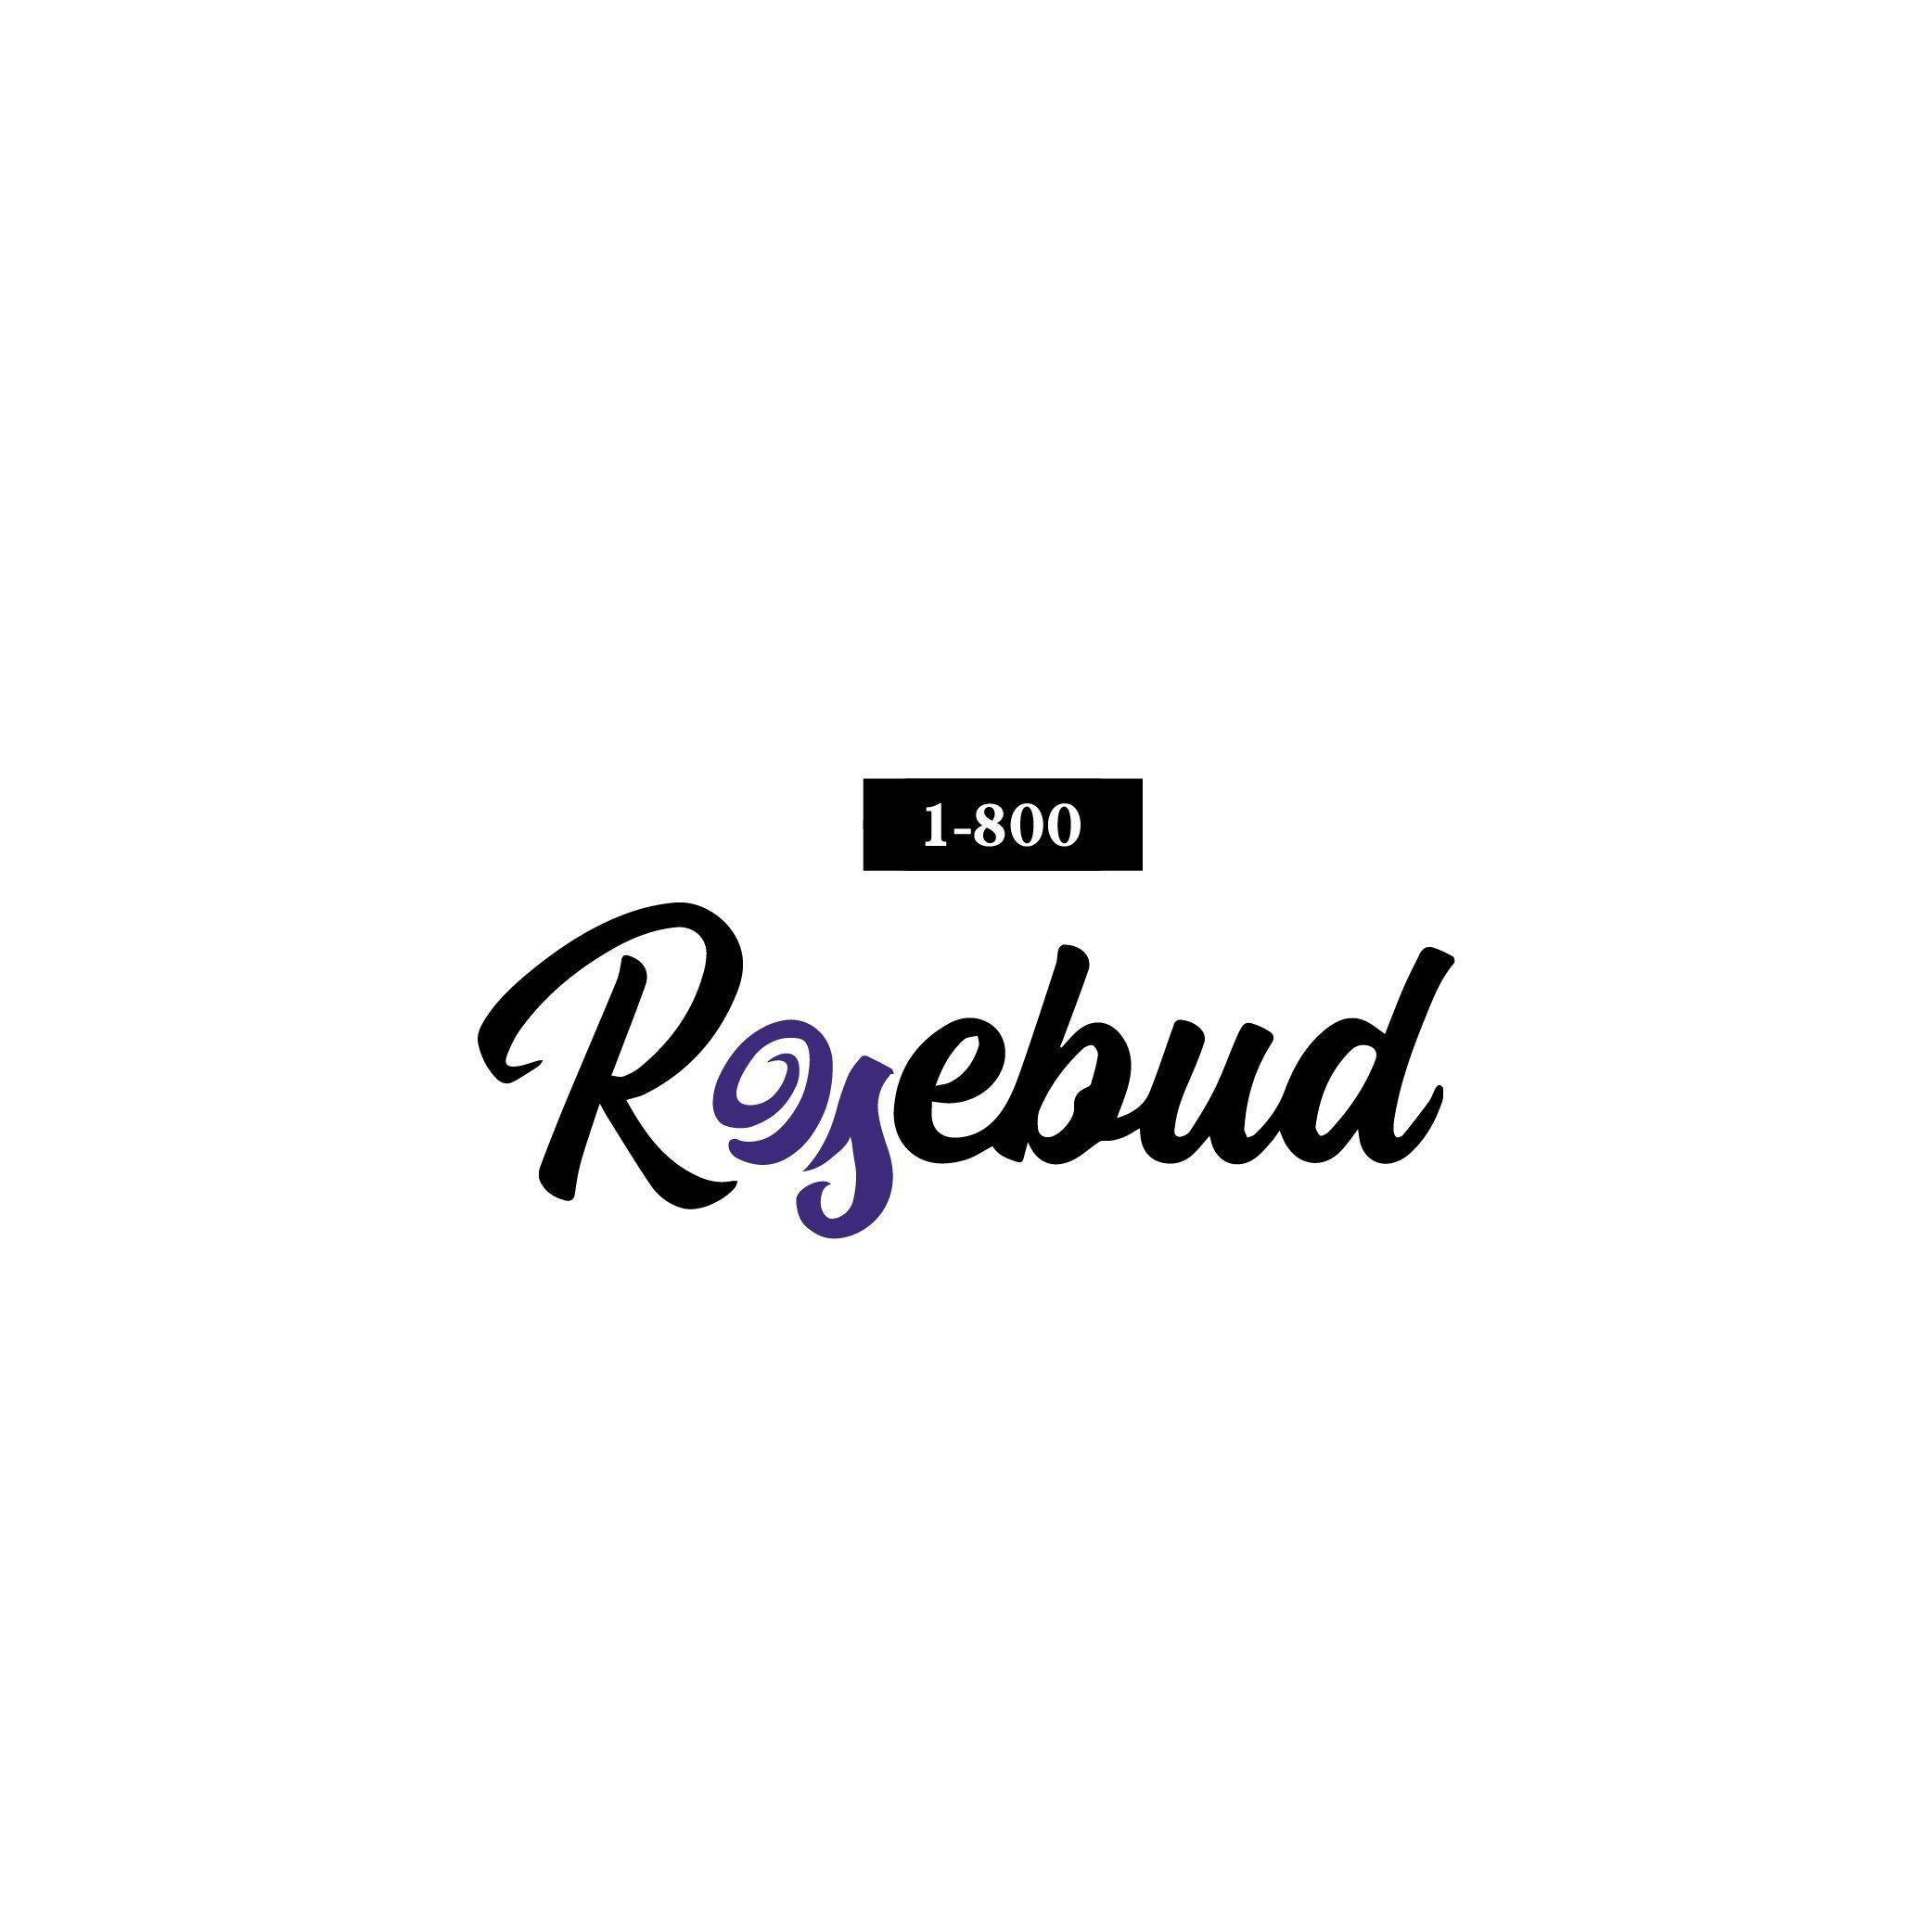 Rosebud Logo - Rosebud logo thirty logos | thirty logos | Logos, Cool logo, Logo design